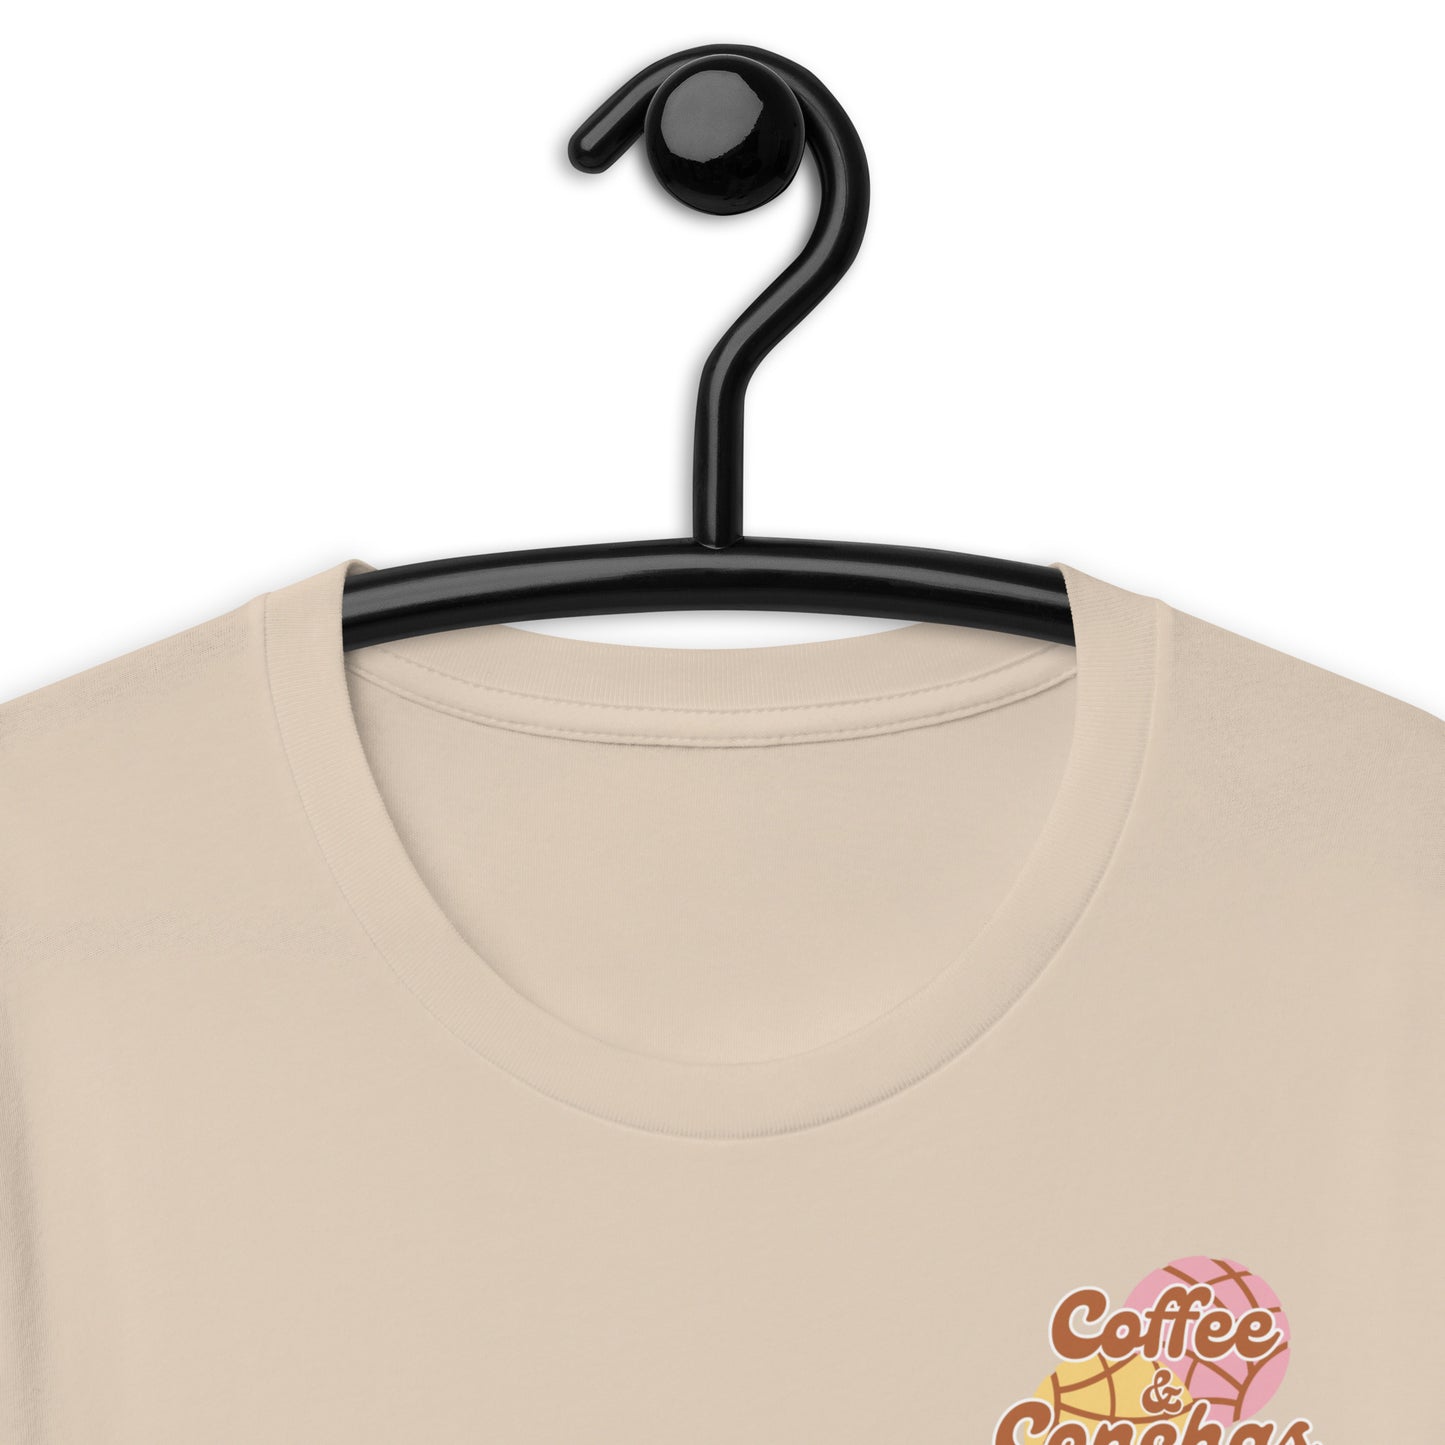 Coffee & Conchas | T-Shirt | Regular Fit